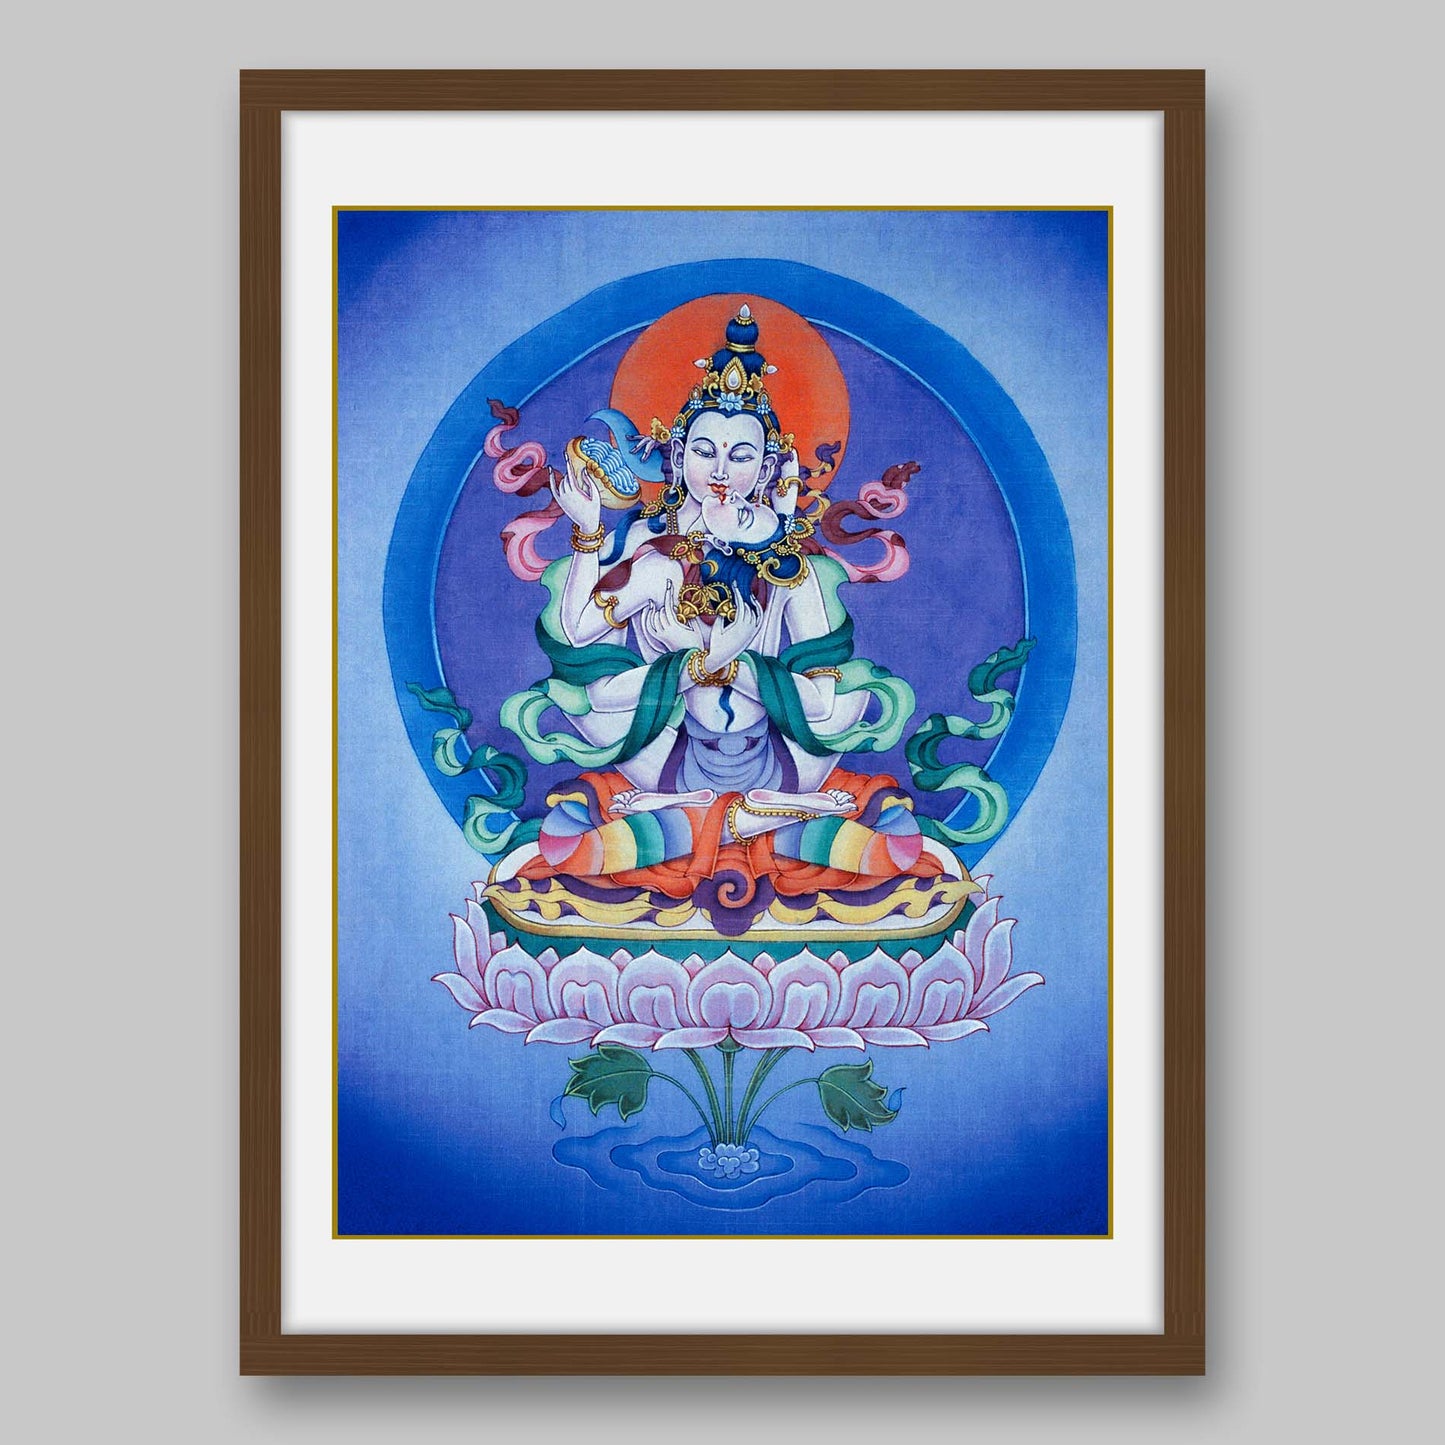 Samantabhadra – The Primordial Buddha – With His Consort Samantabhadri- High Quality Print of Artwork by Pieter Weltevrede